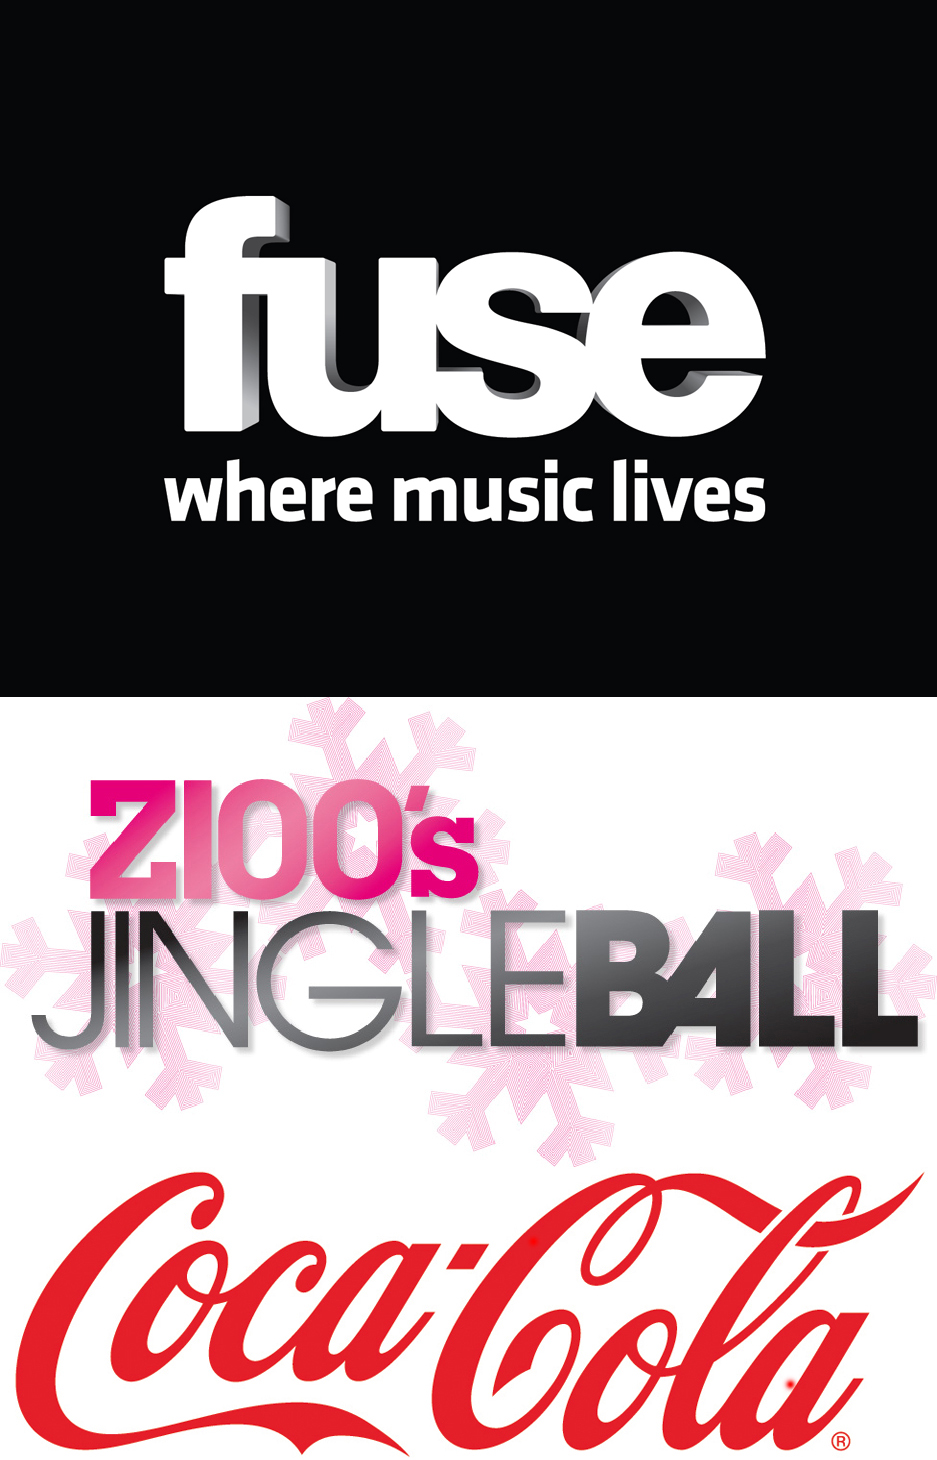 Fuse & Z100 New York & Coca-Cola